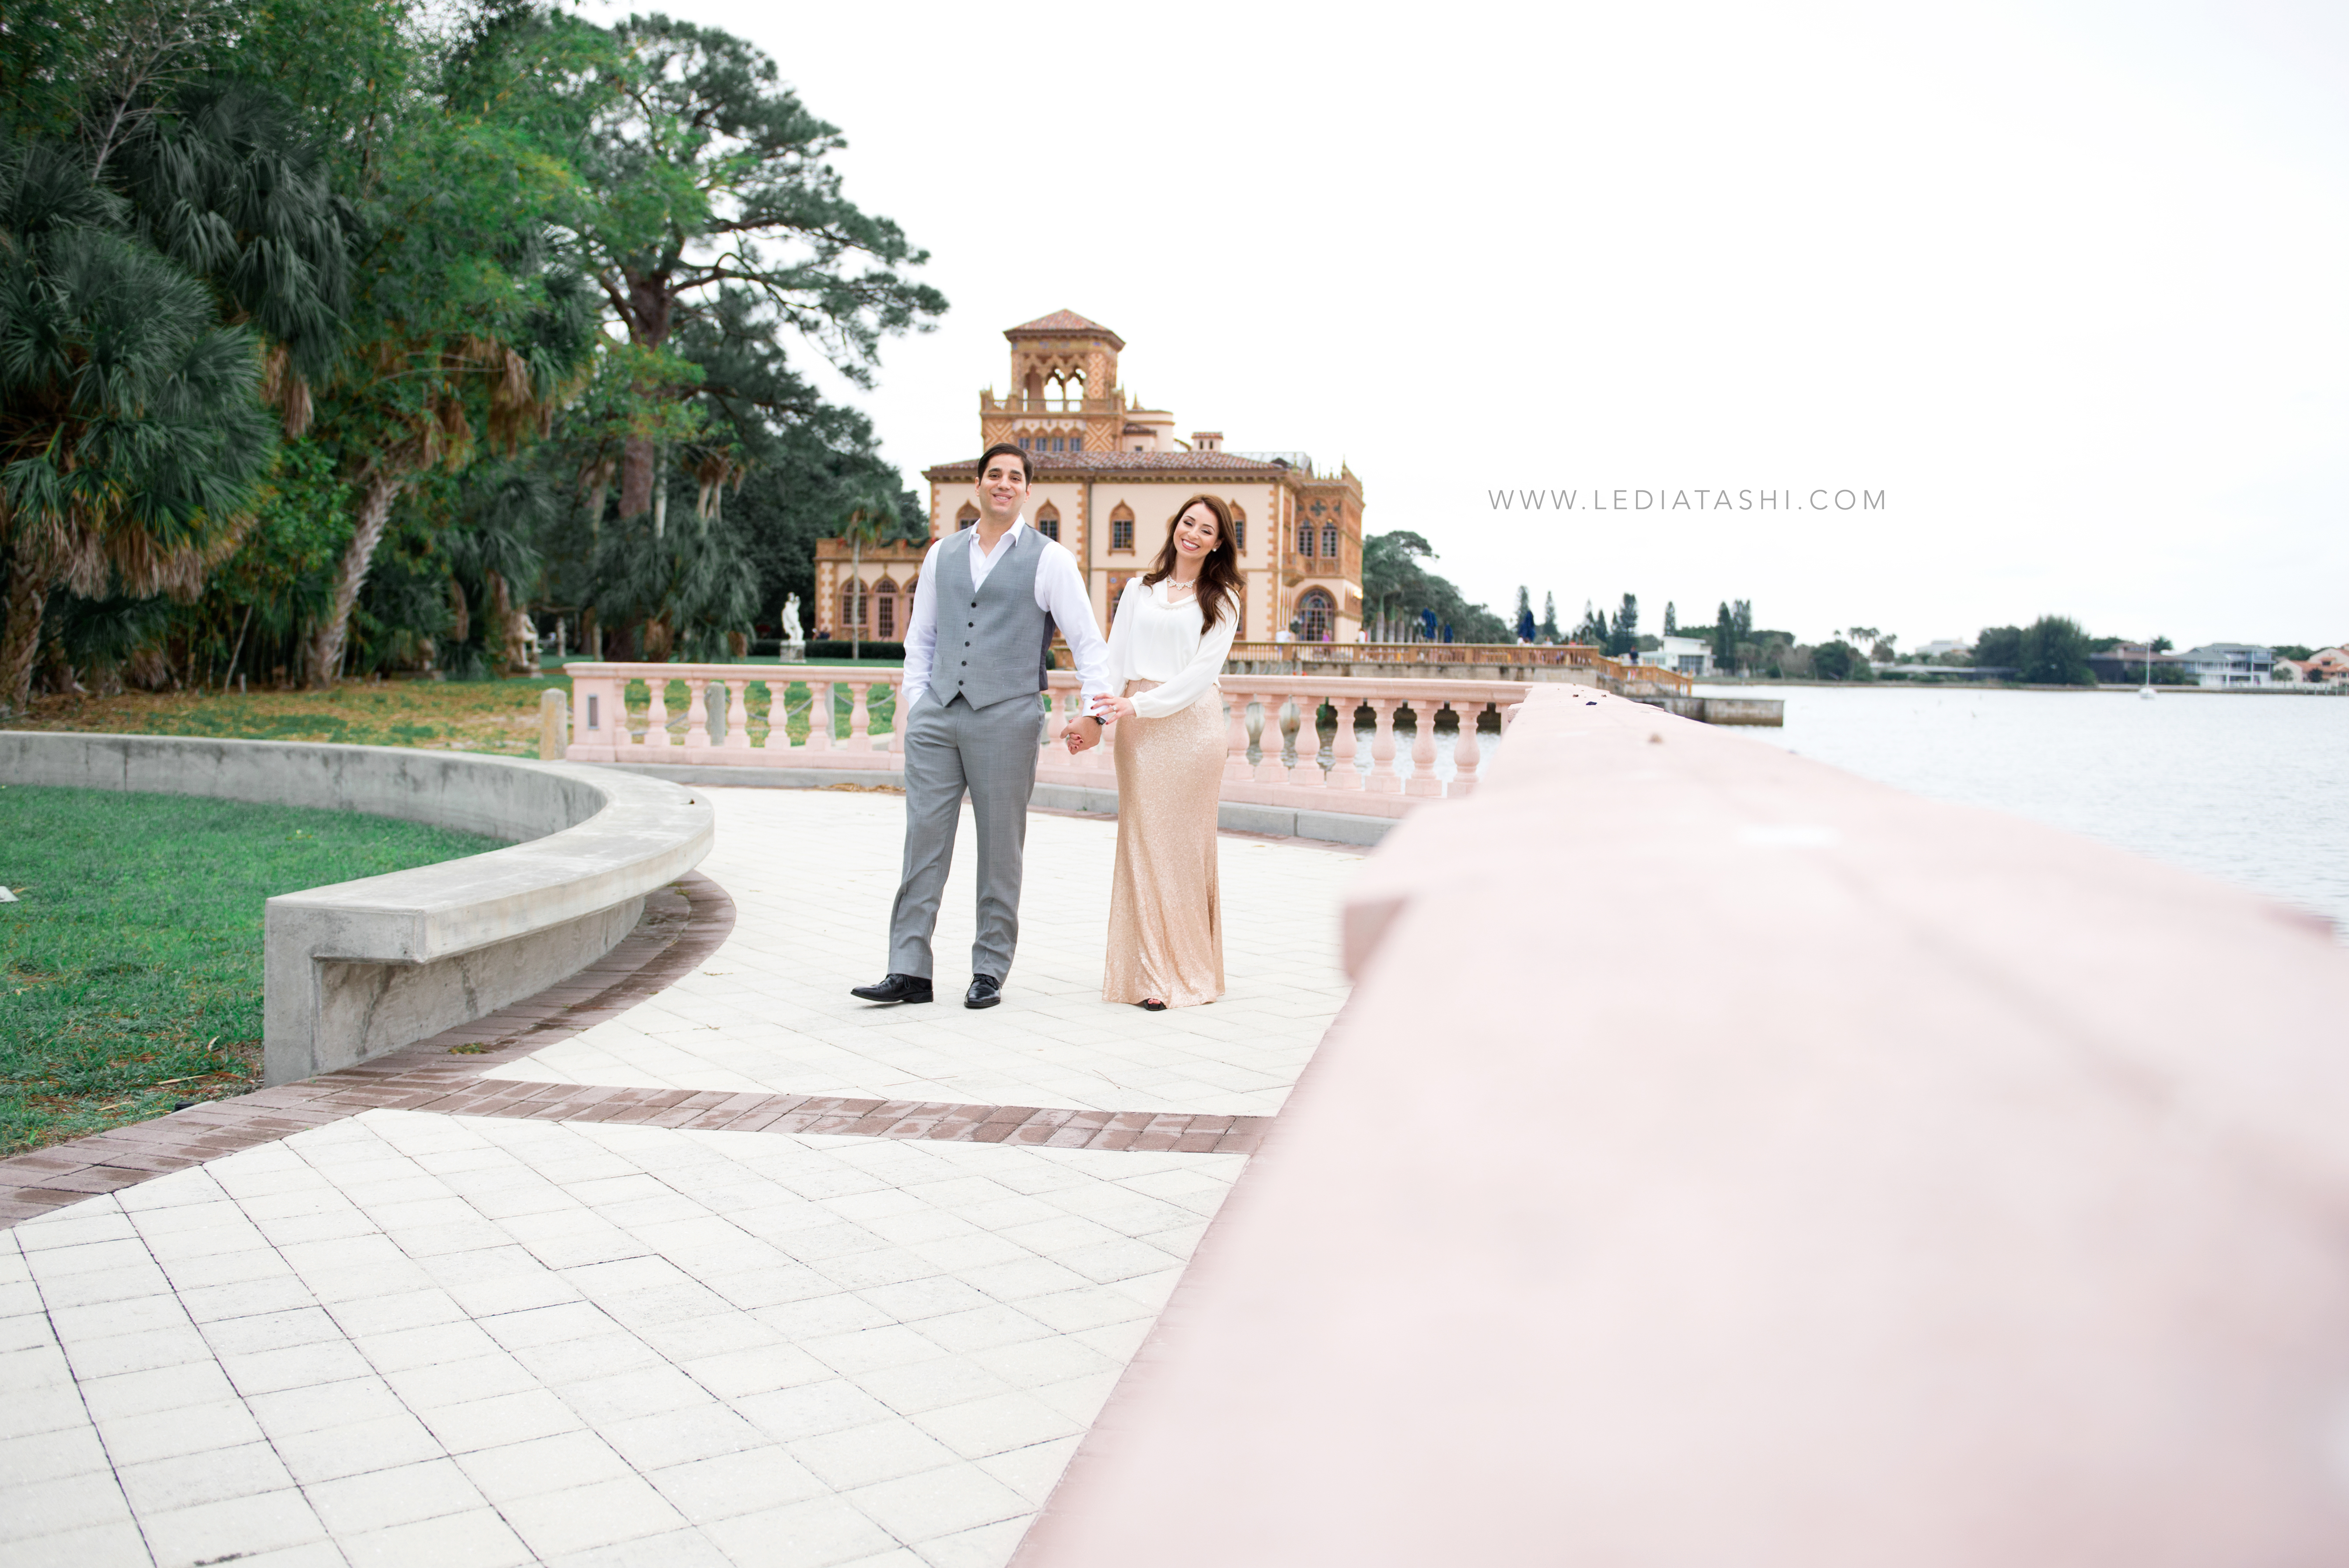 Tampa Engagements & Wedding